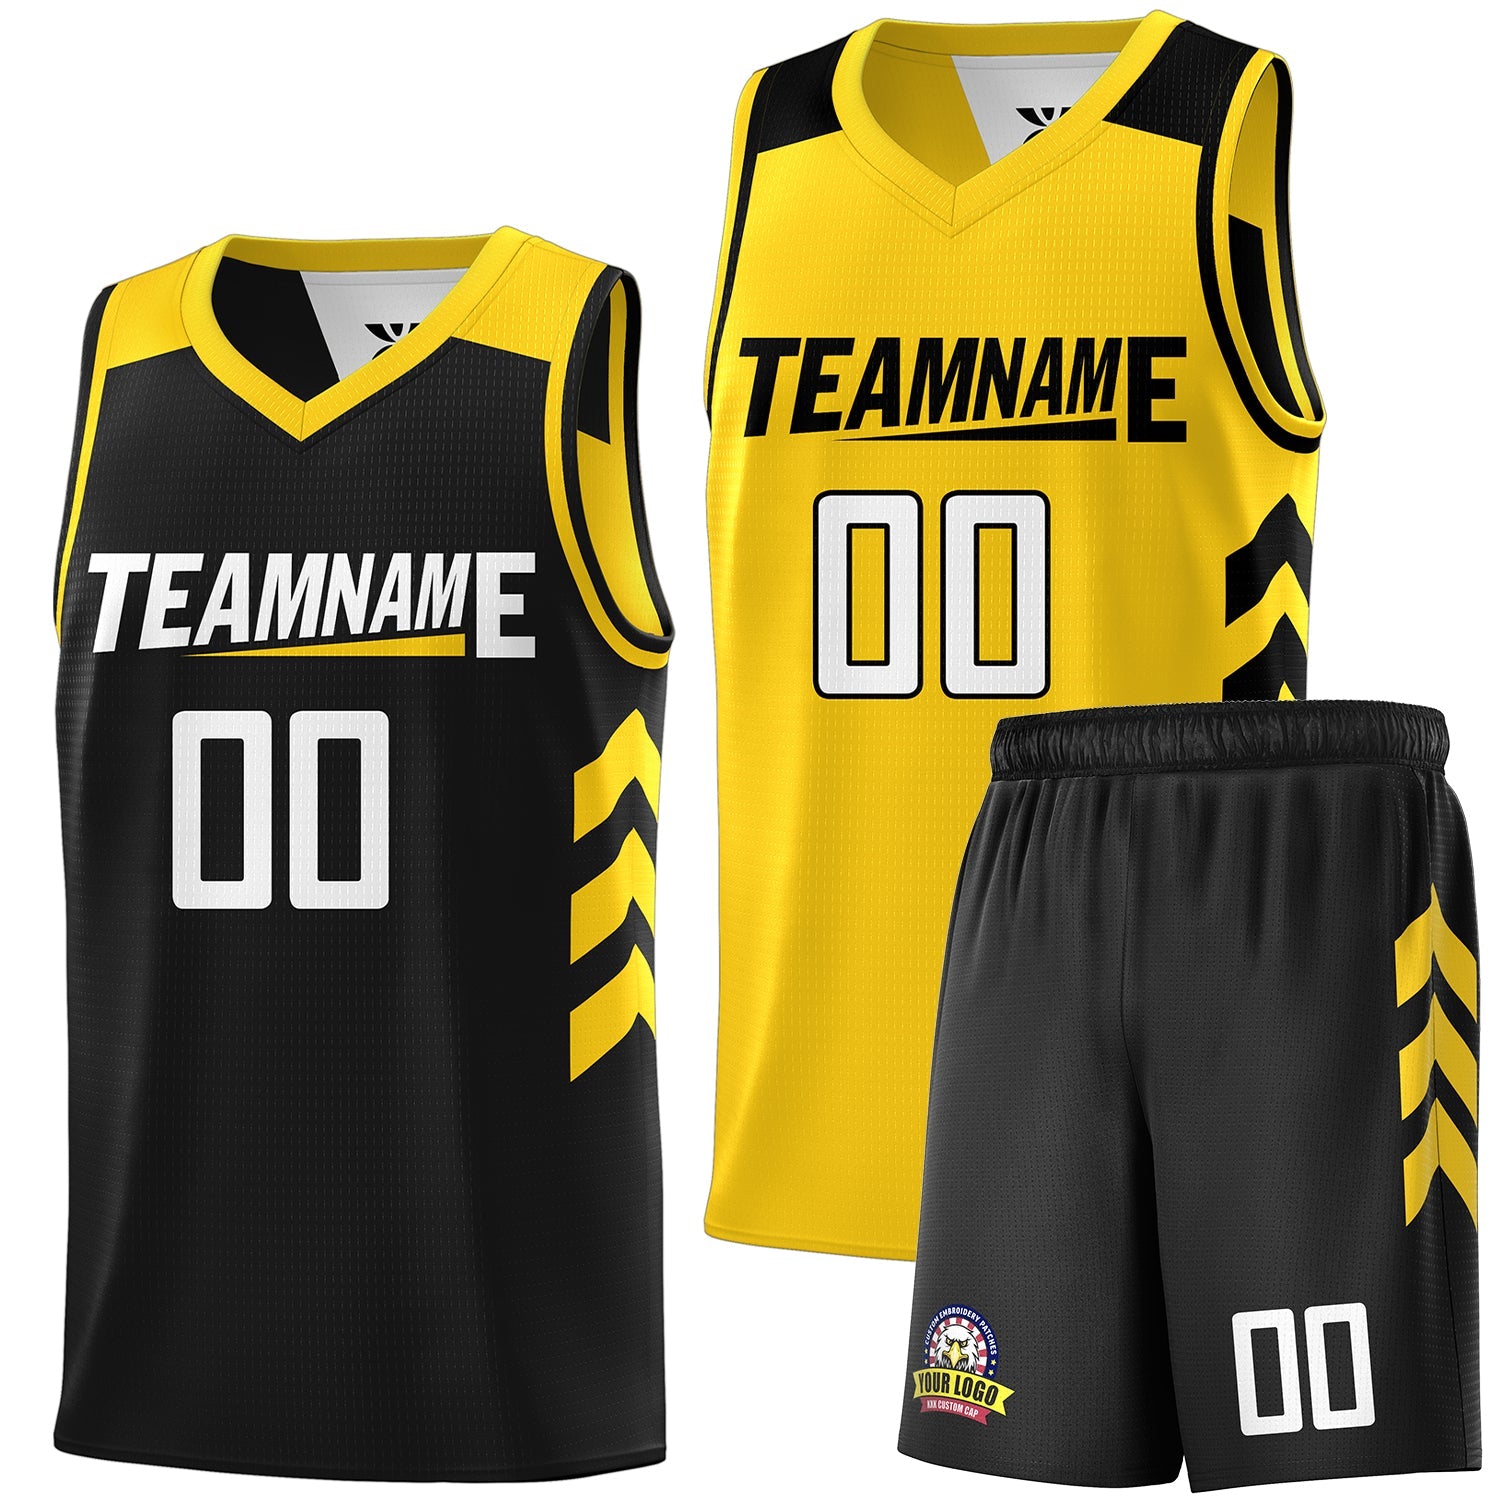  Custom Men Youth Reversible Basketball Jersey Uniform Printed  Personalized Name Number Sportswear Big Size, Black&orange-24, One Size 